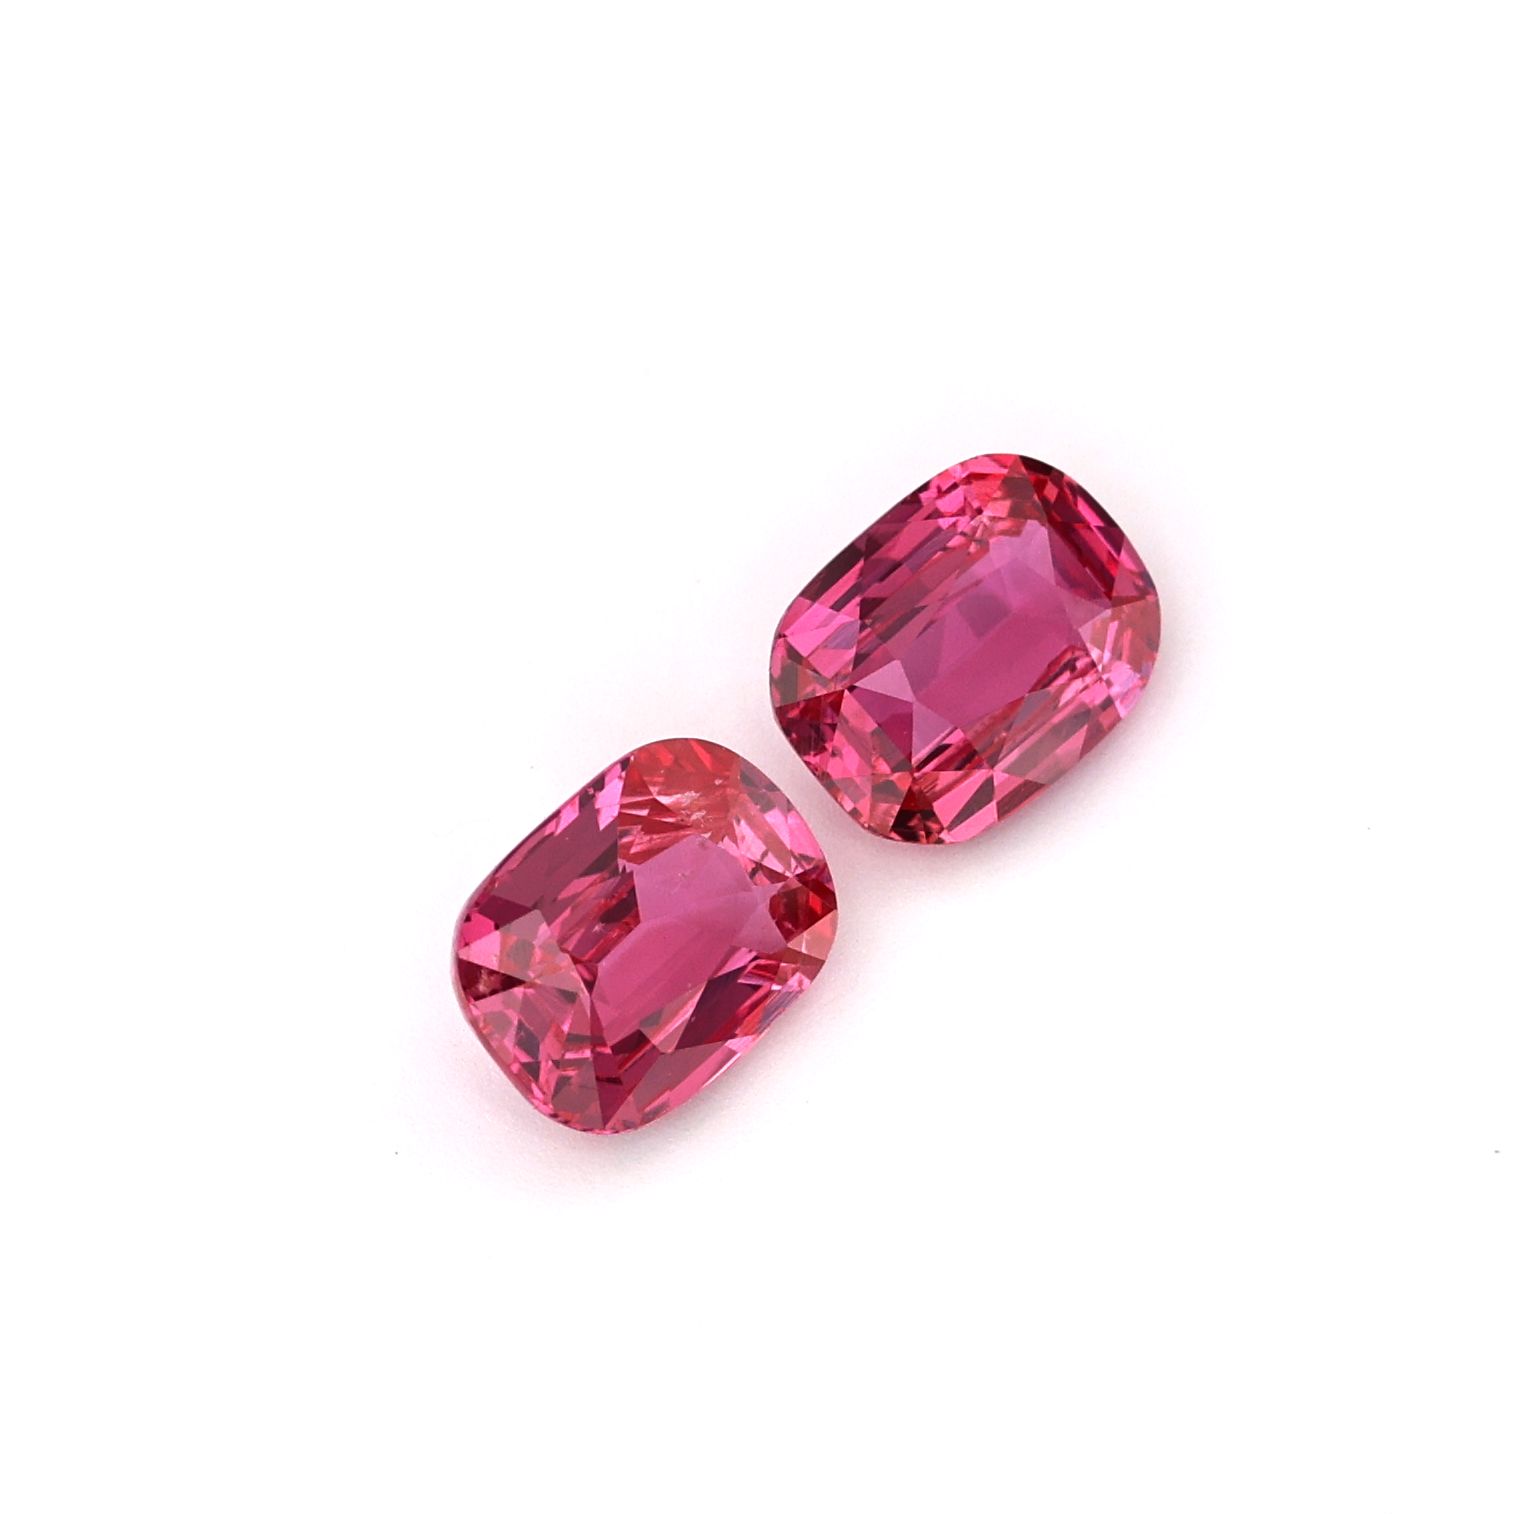 Mozambique pink sapphire